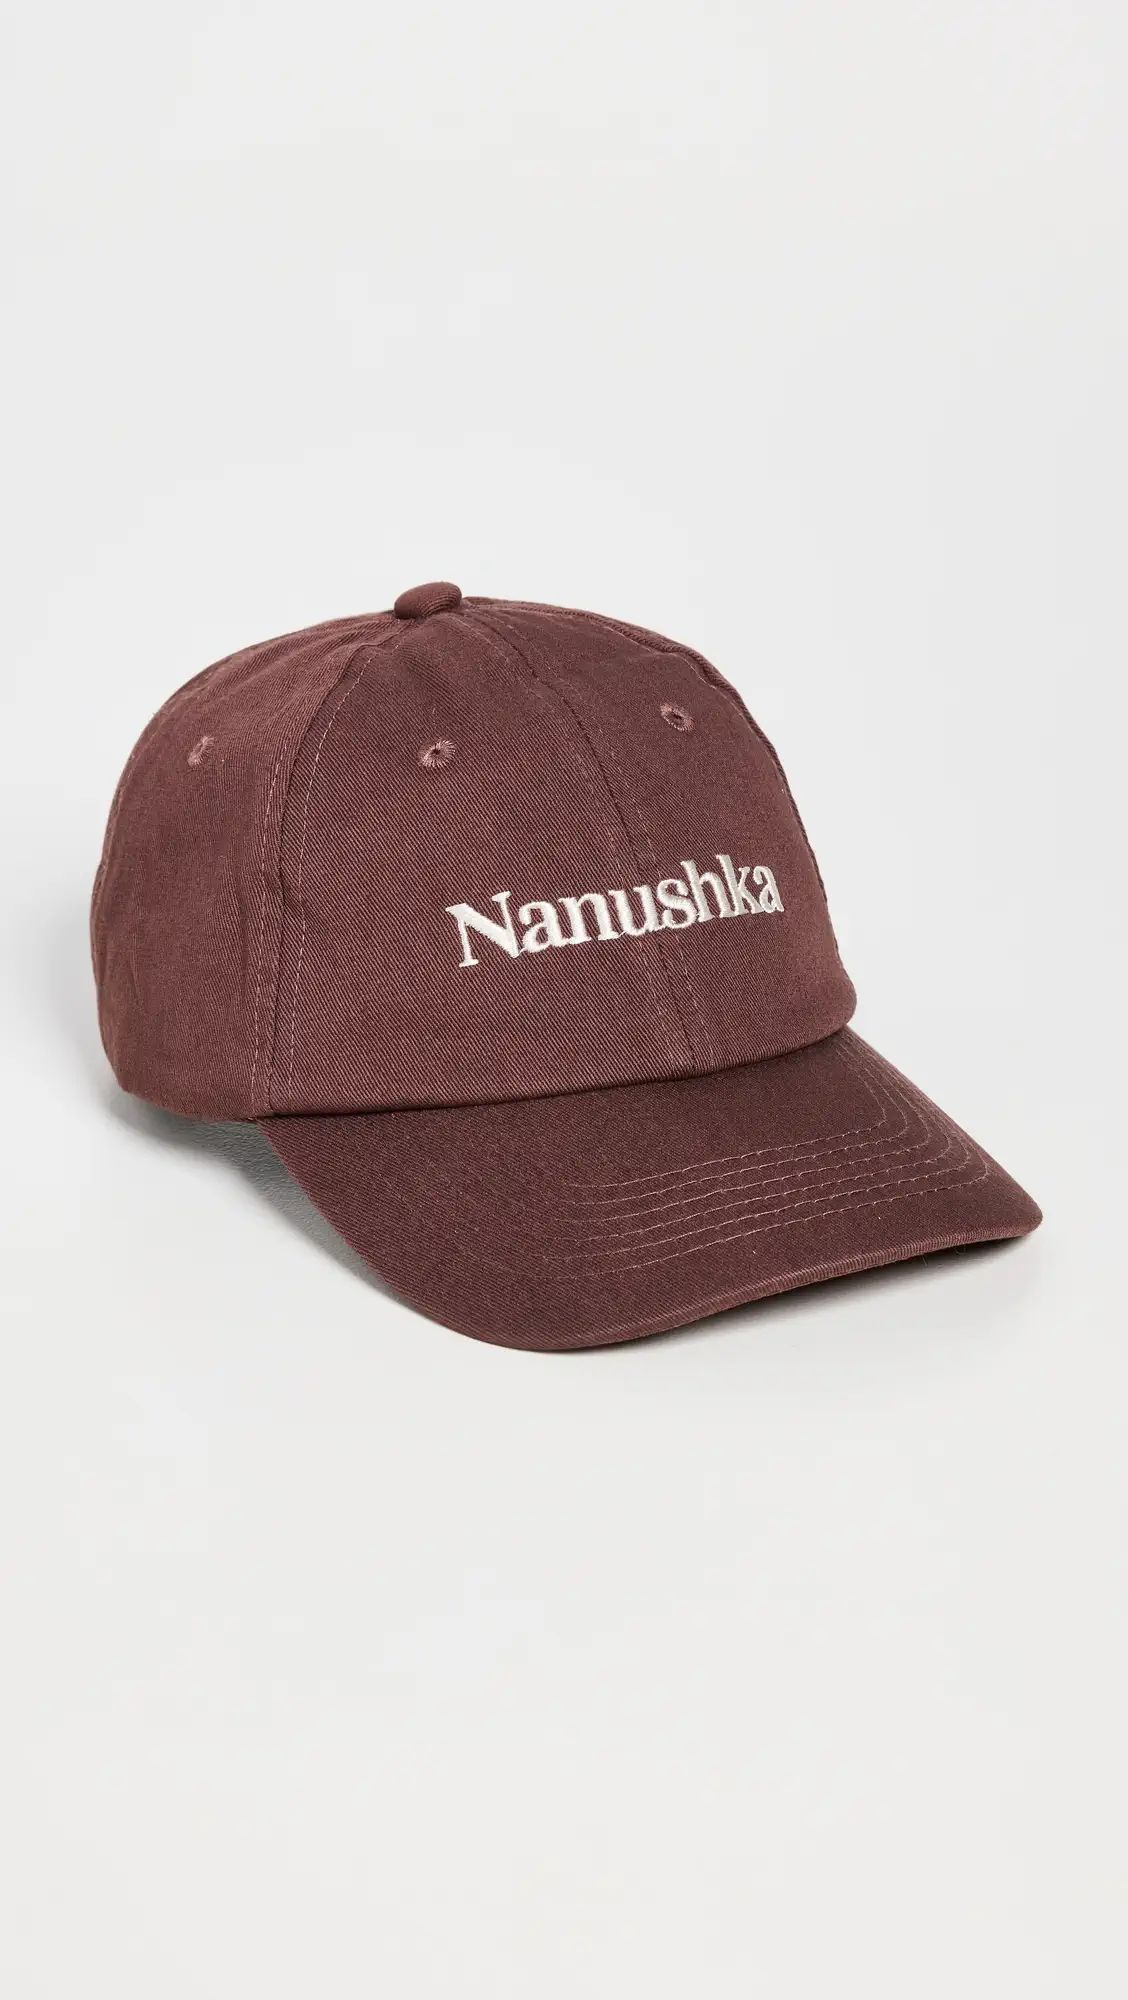 Nanushka | Shopbop